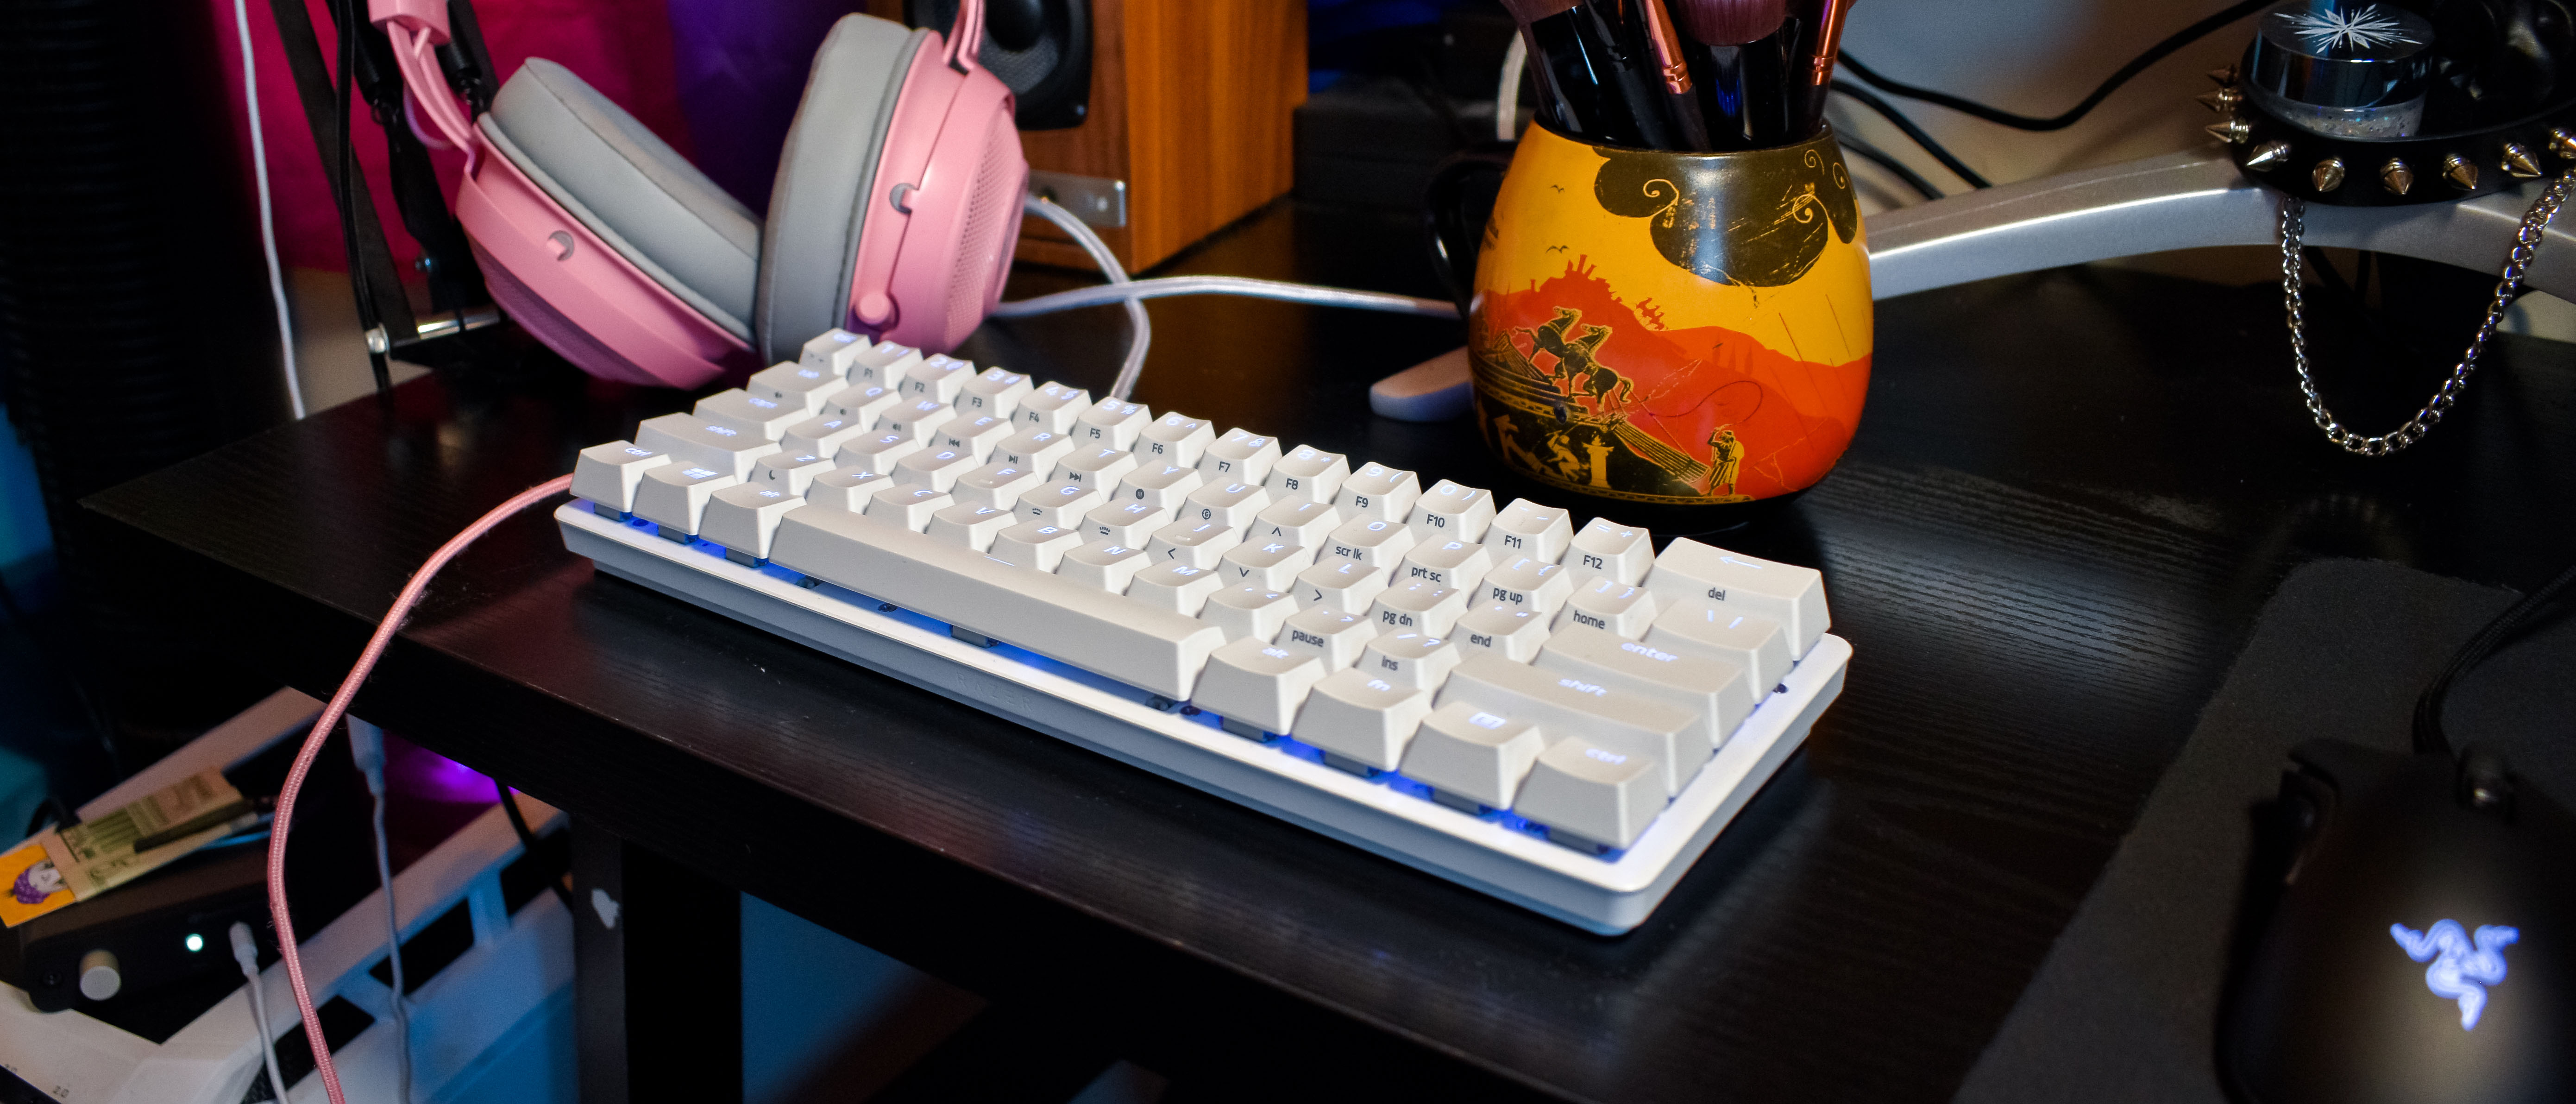 Razer Huntsman Mini review: Meet Razer's first ever 60% keyboard